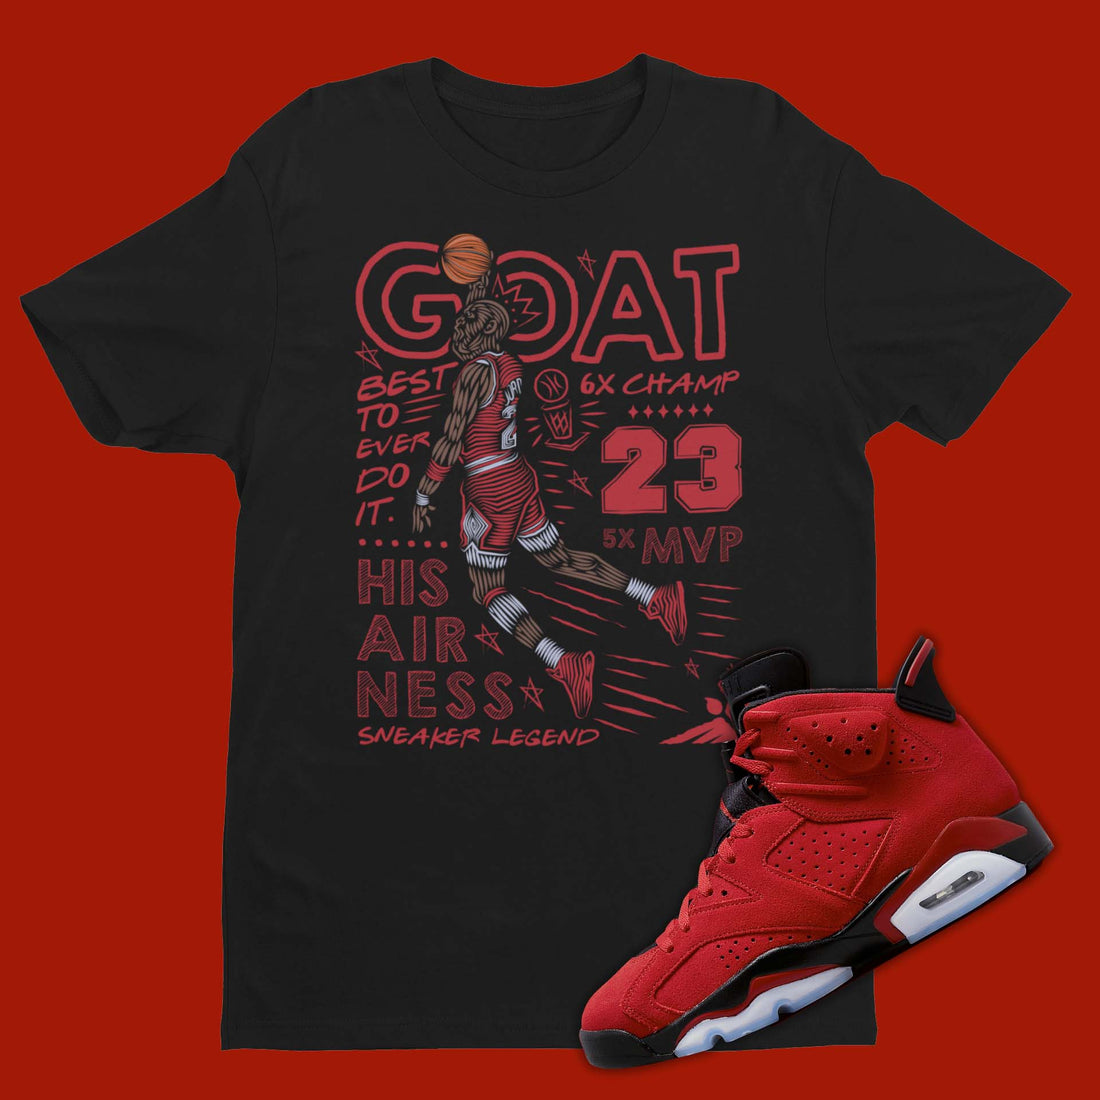 Jordan dunking t-shirt designed to match the Air Jordan 6 Toro Bravo.